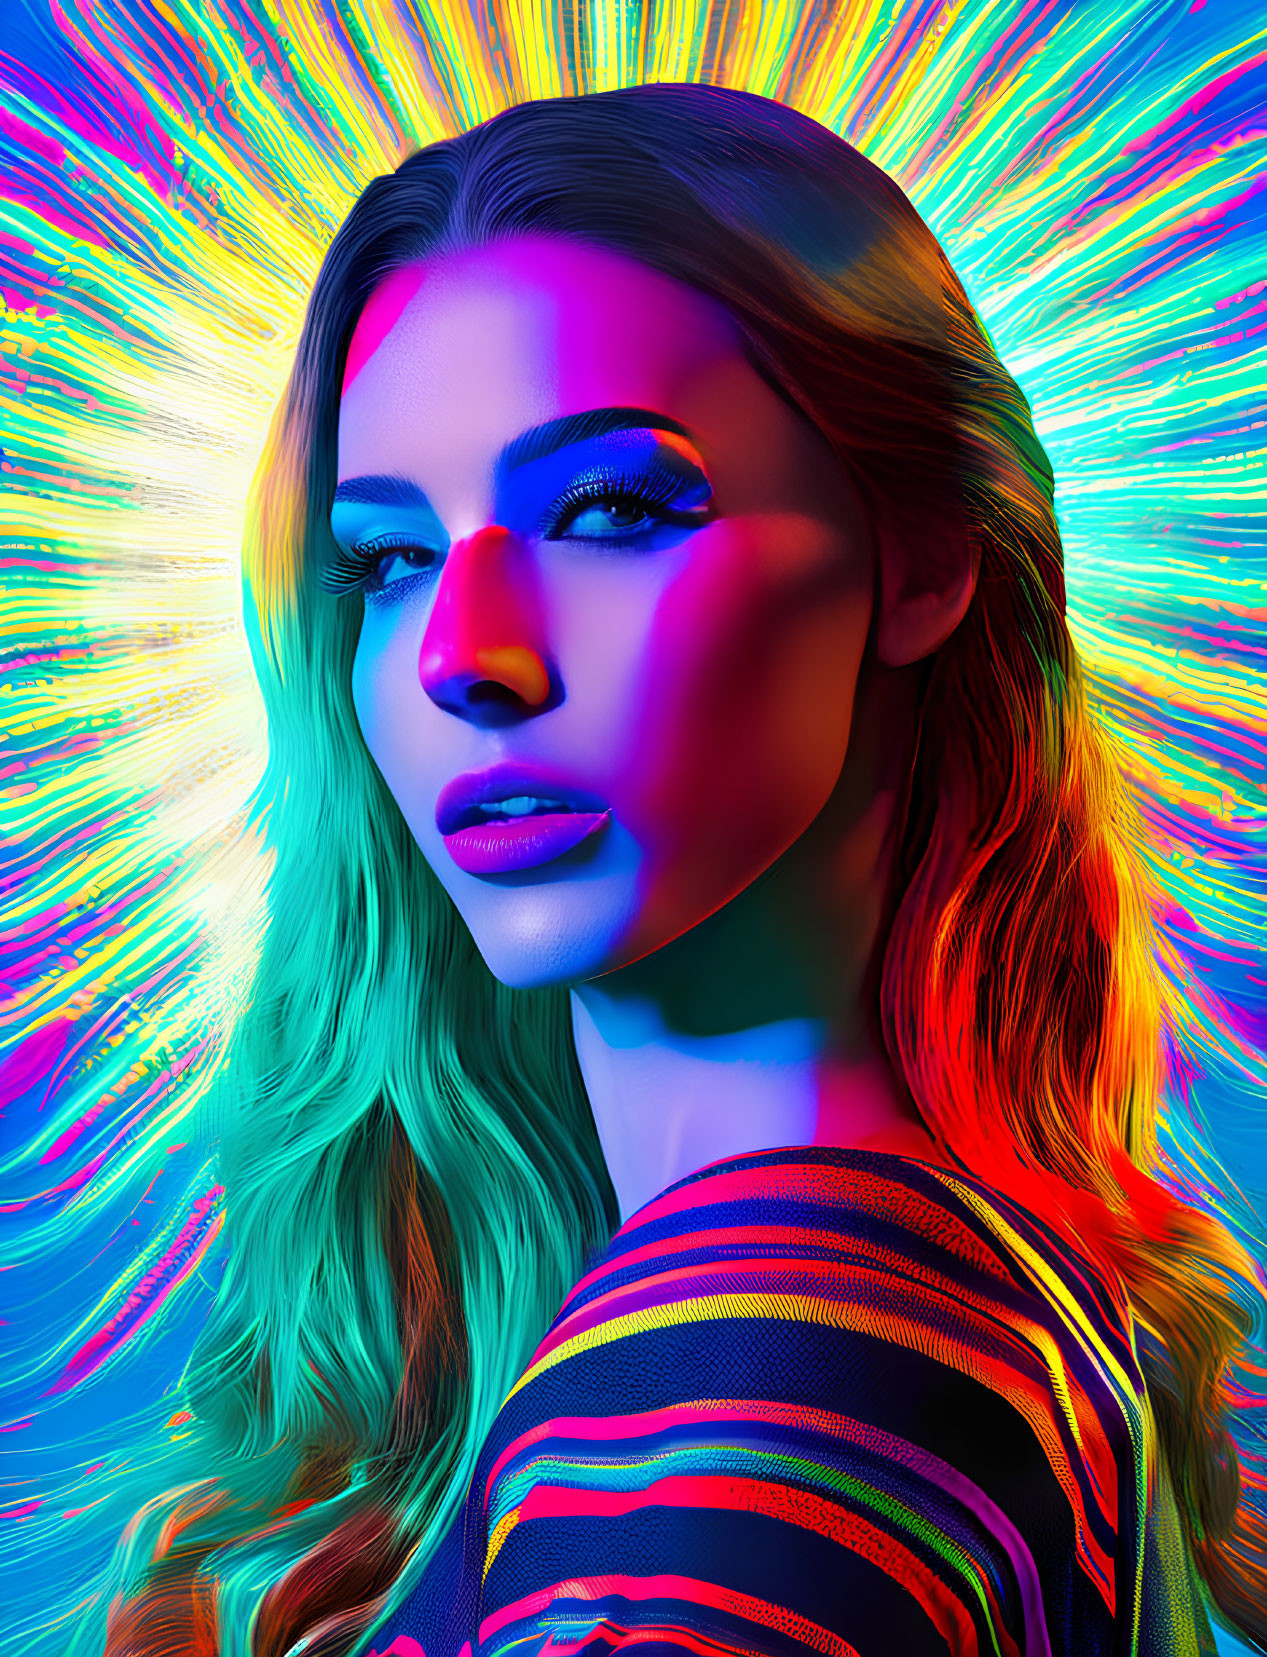 Colorful Rainbow Lighting Portrait with Neon Futuristic Vibe